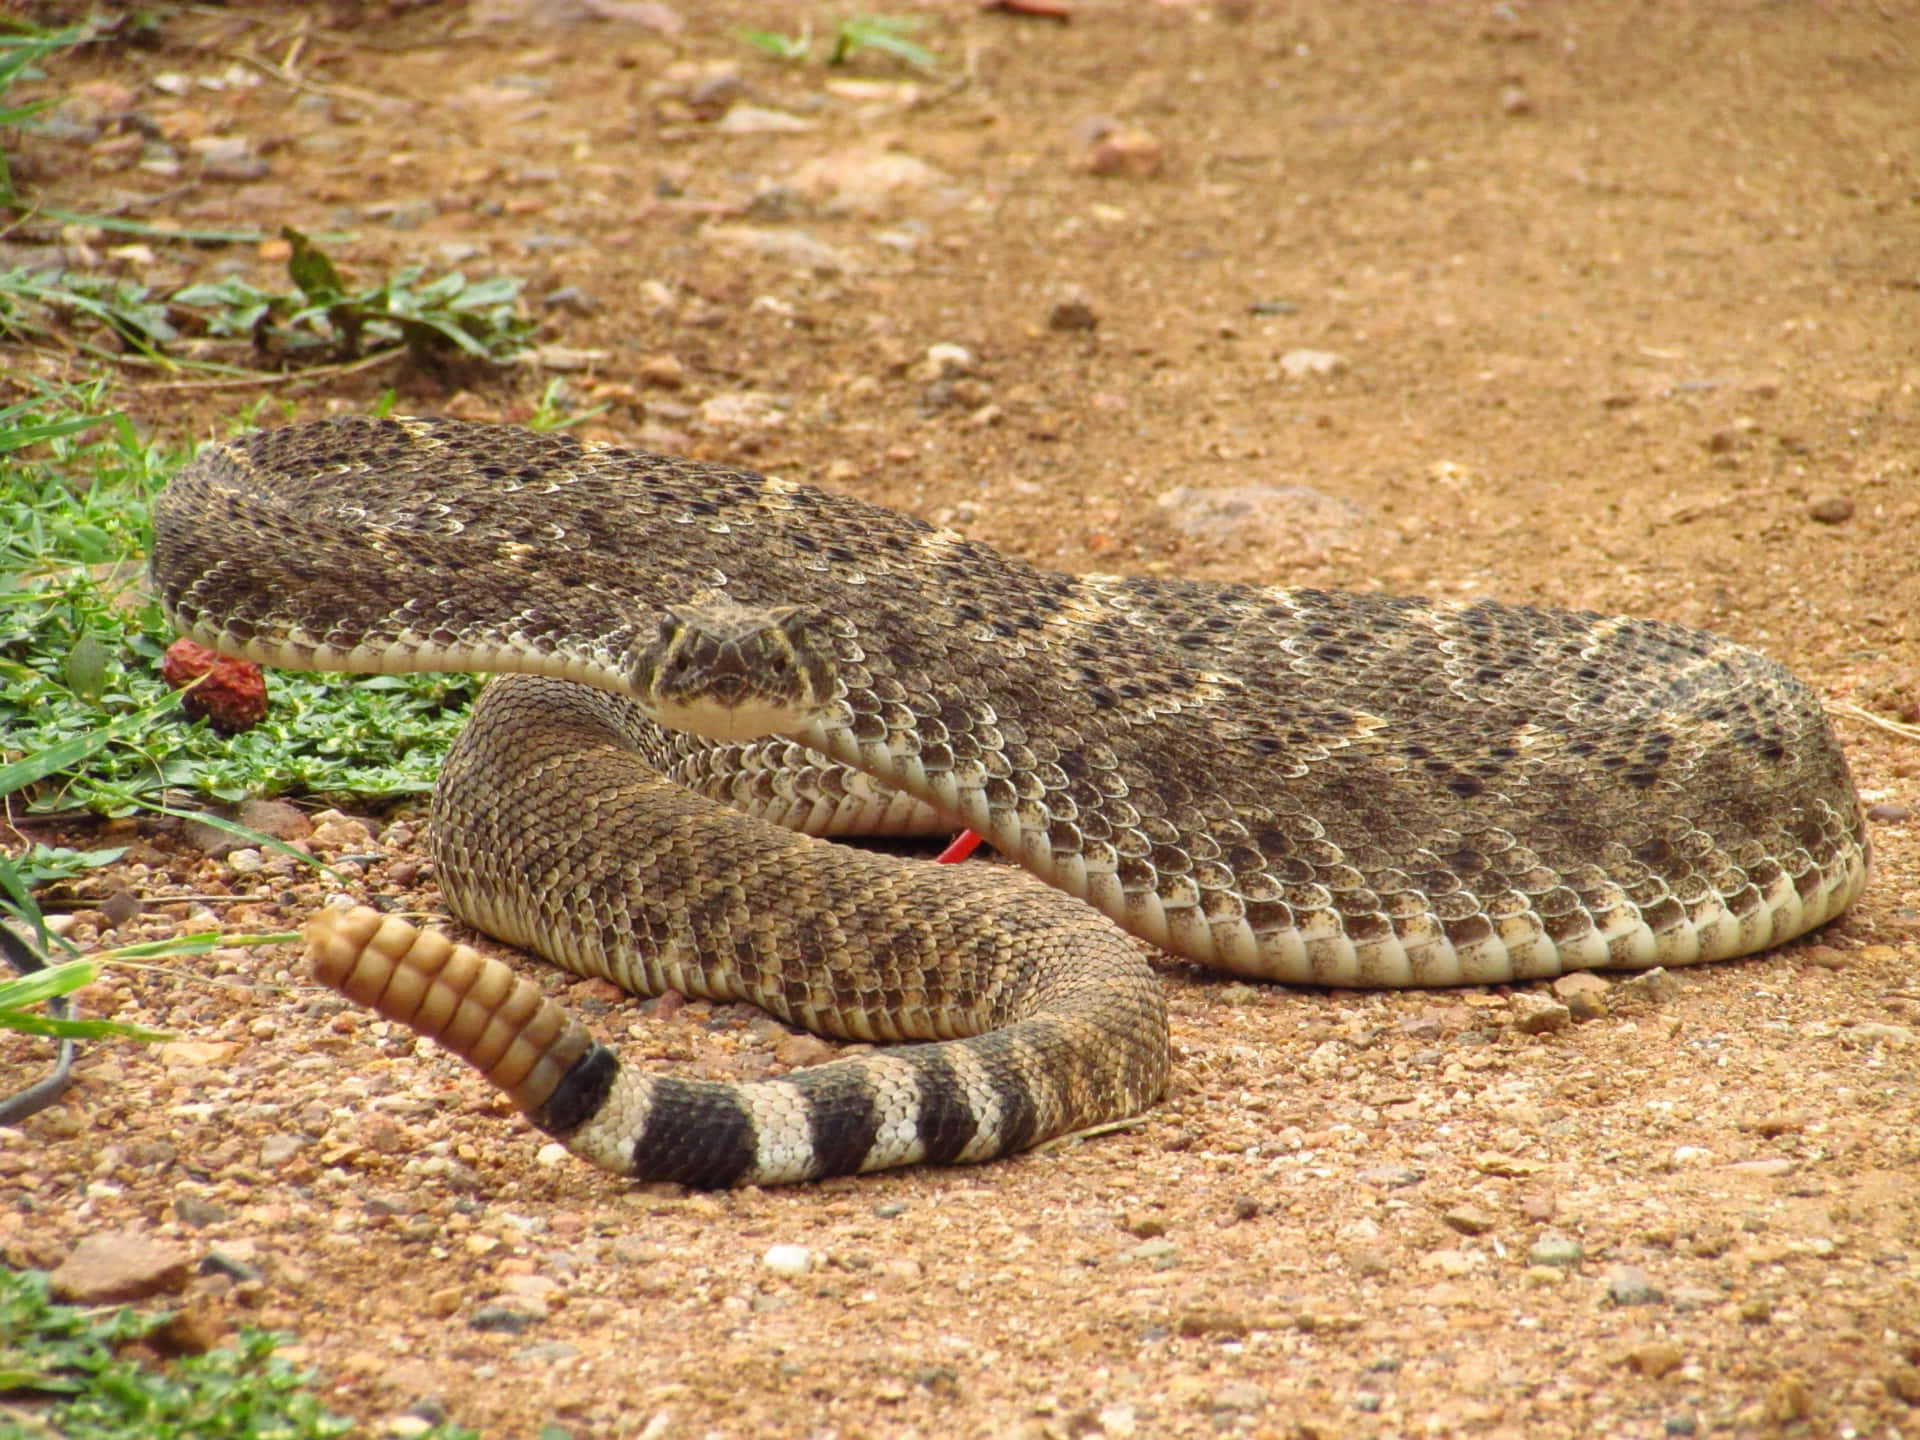 A Closeup of the Venomous Rattlesnake